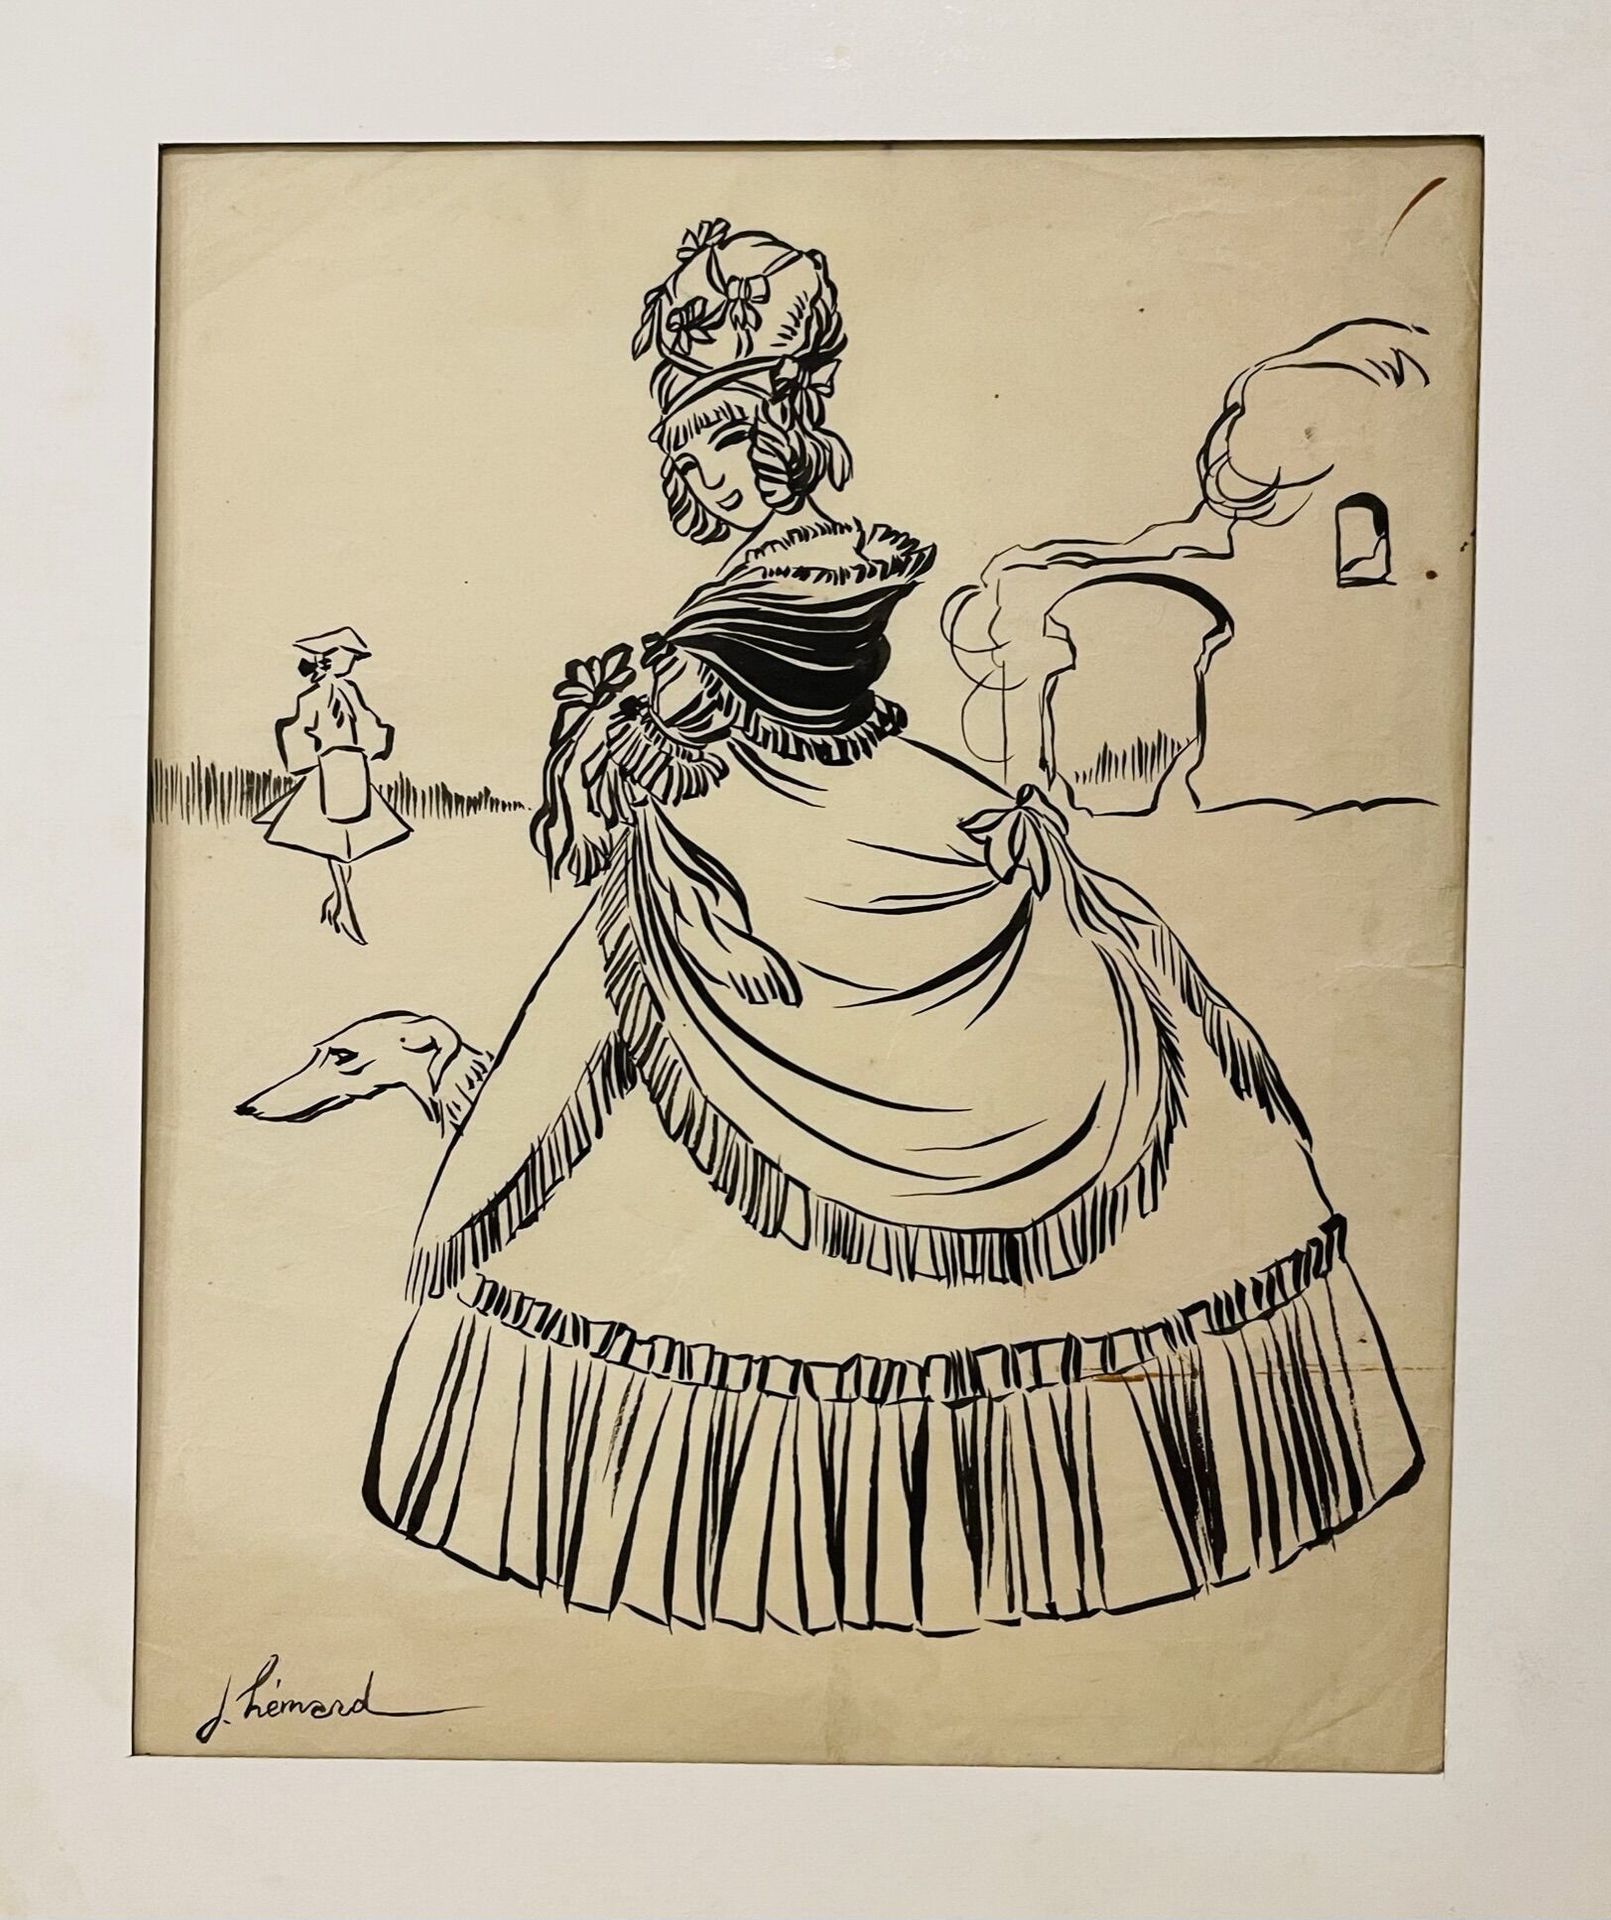 Null Joseph HÉMARD (Les Mureaux 1880/1 - París 1961)

"Mujer elegante y galgo".
&hellip;